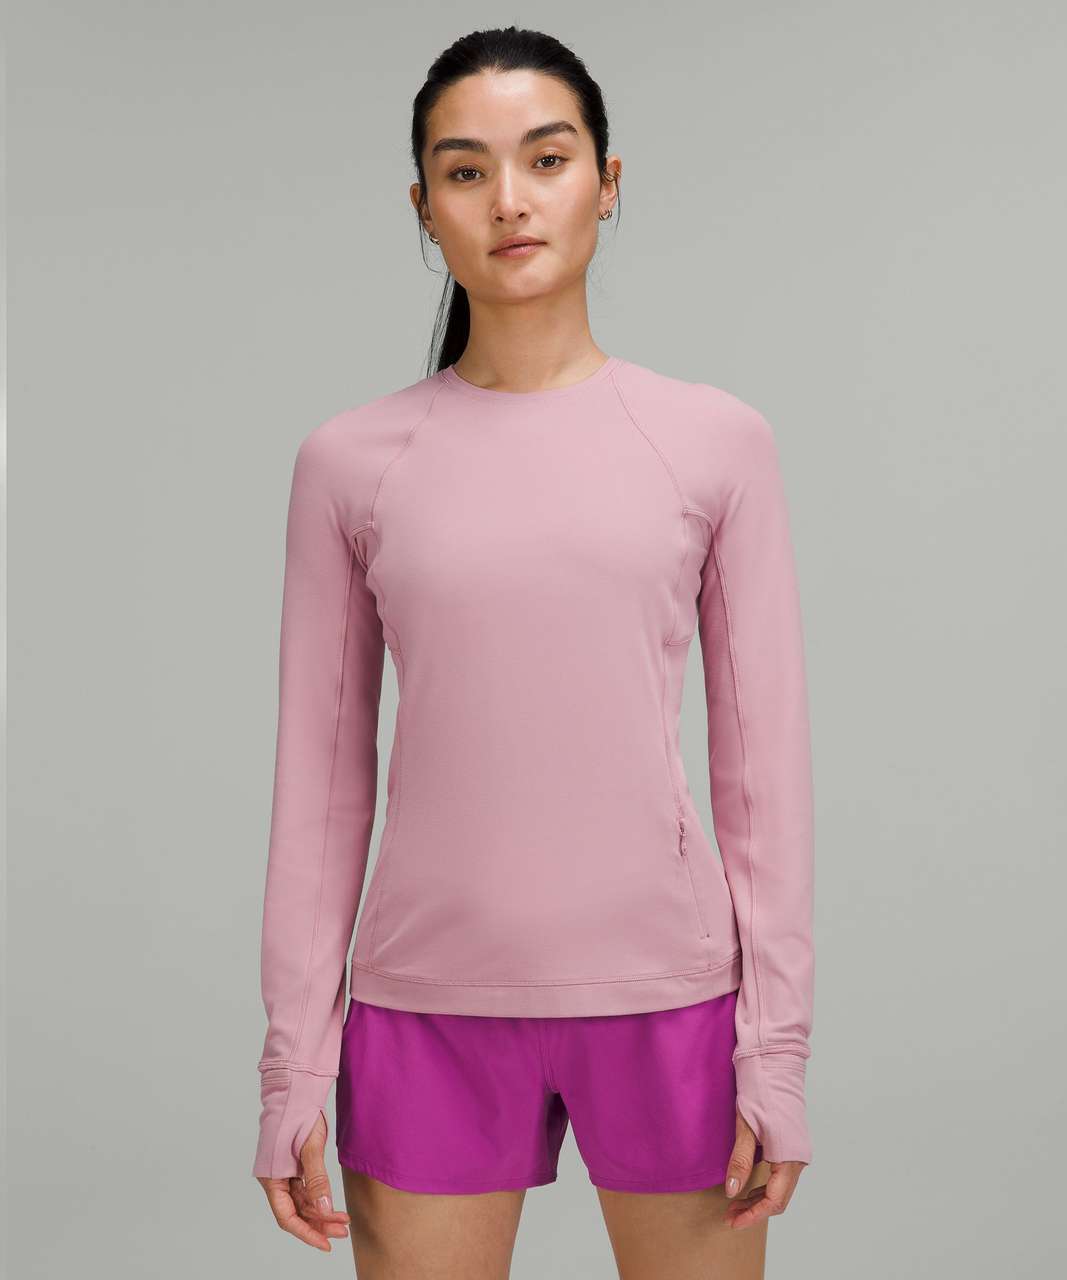 Lululemon Its Rulu Run Long Sleeve Shirt - Pink Taupe